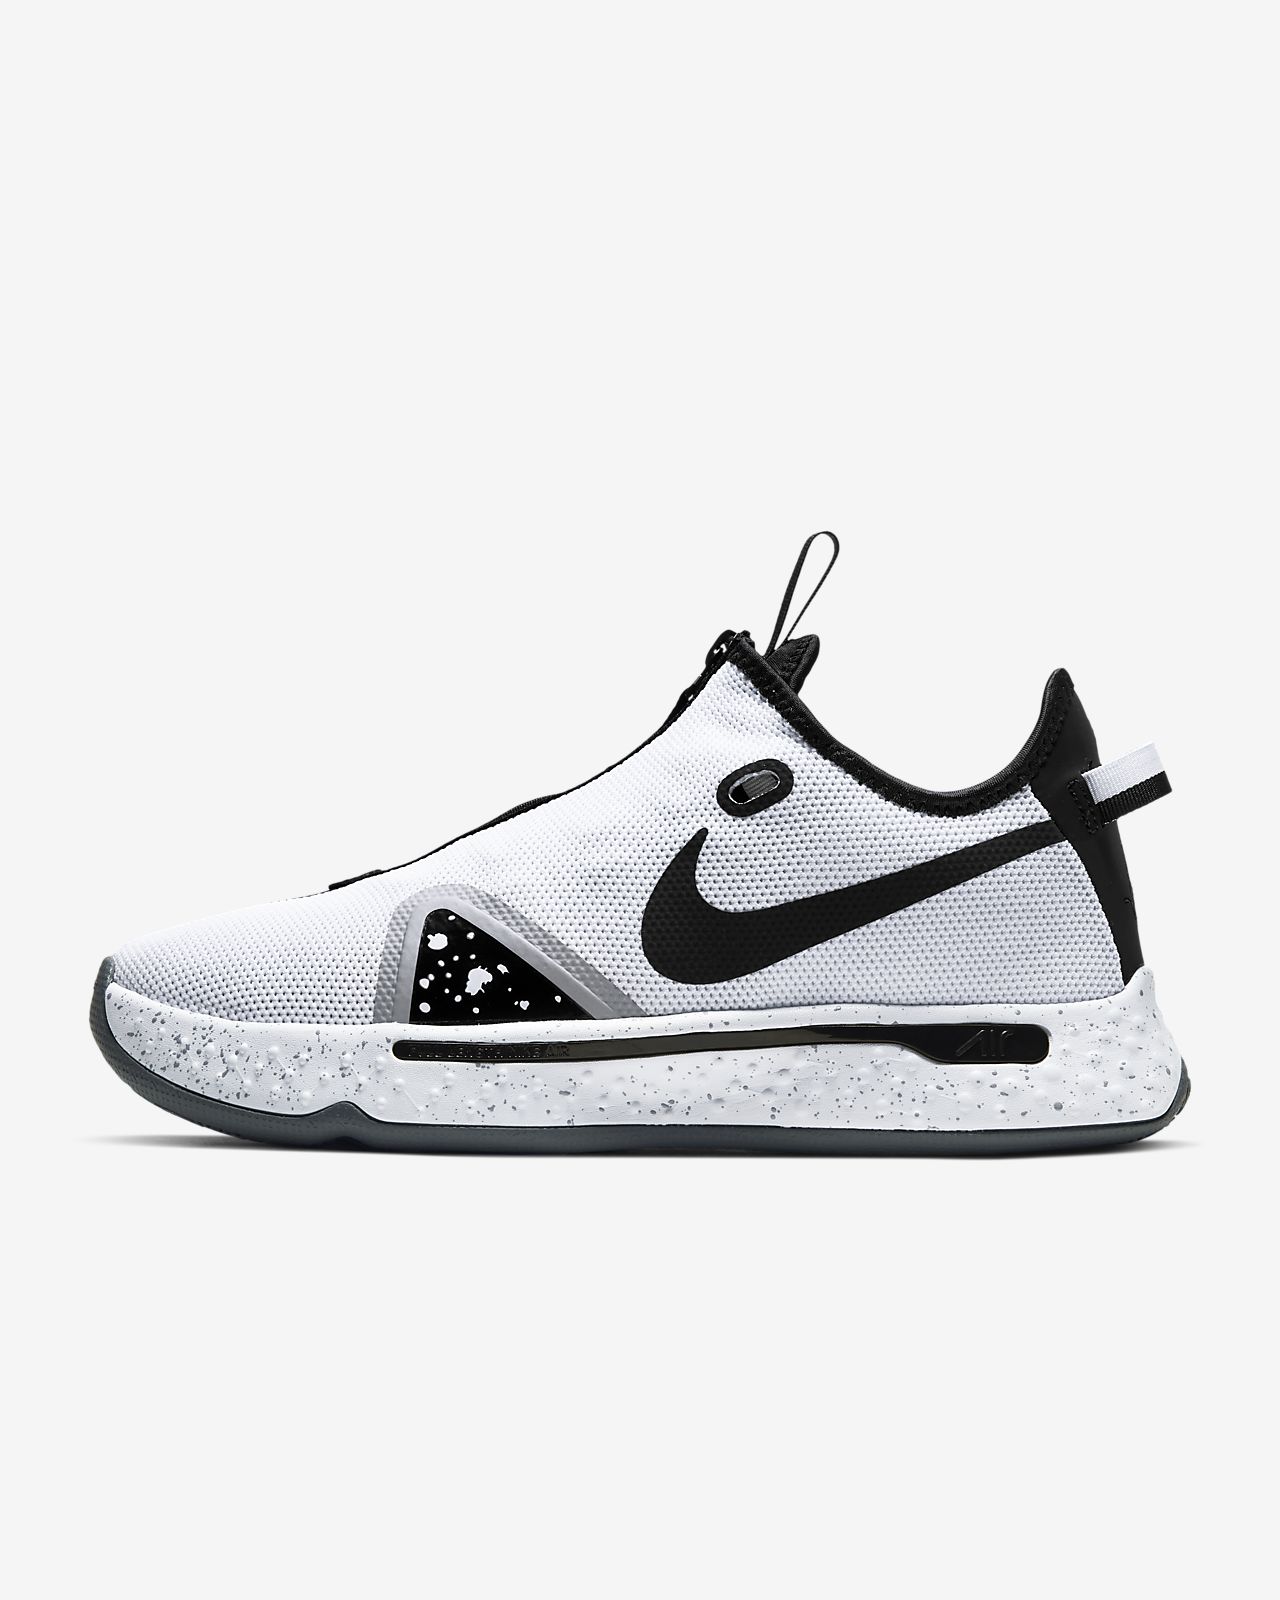 PG 4 Basketball Shoe. Nike BG